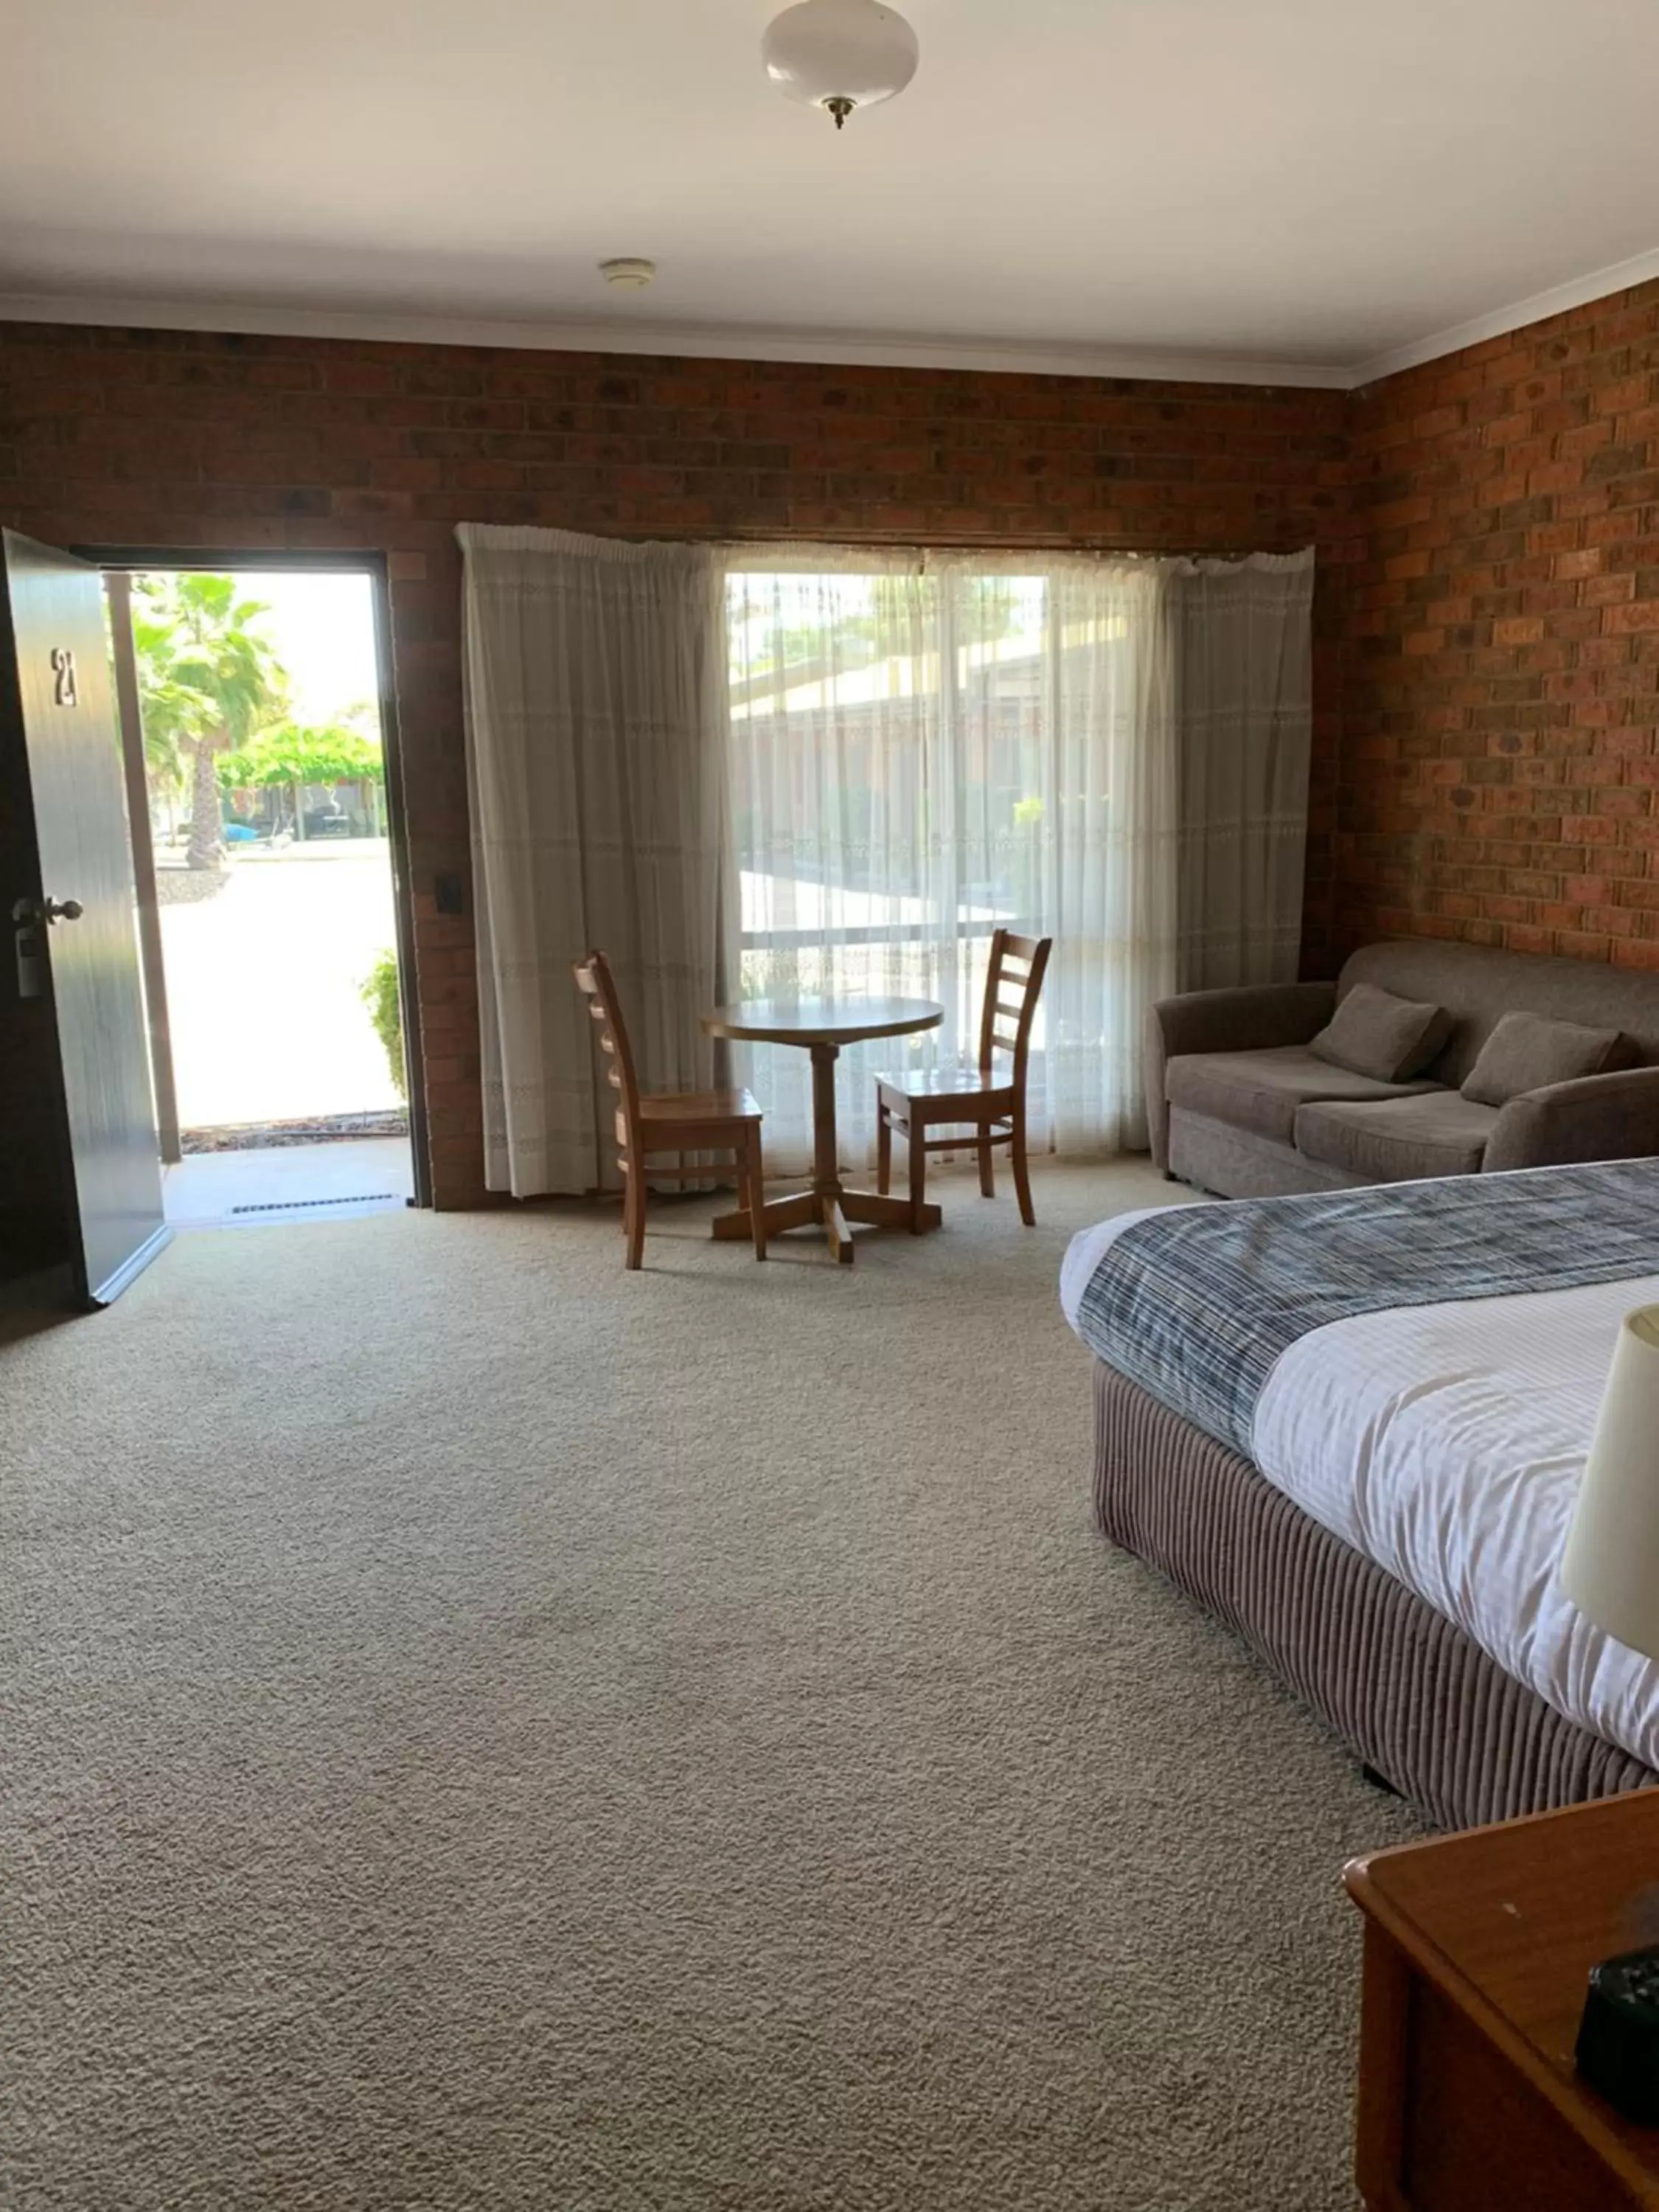 Room Photo in Federation Motel Resort - Corowa